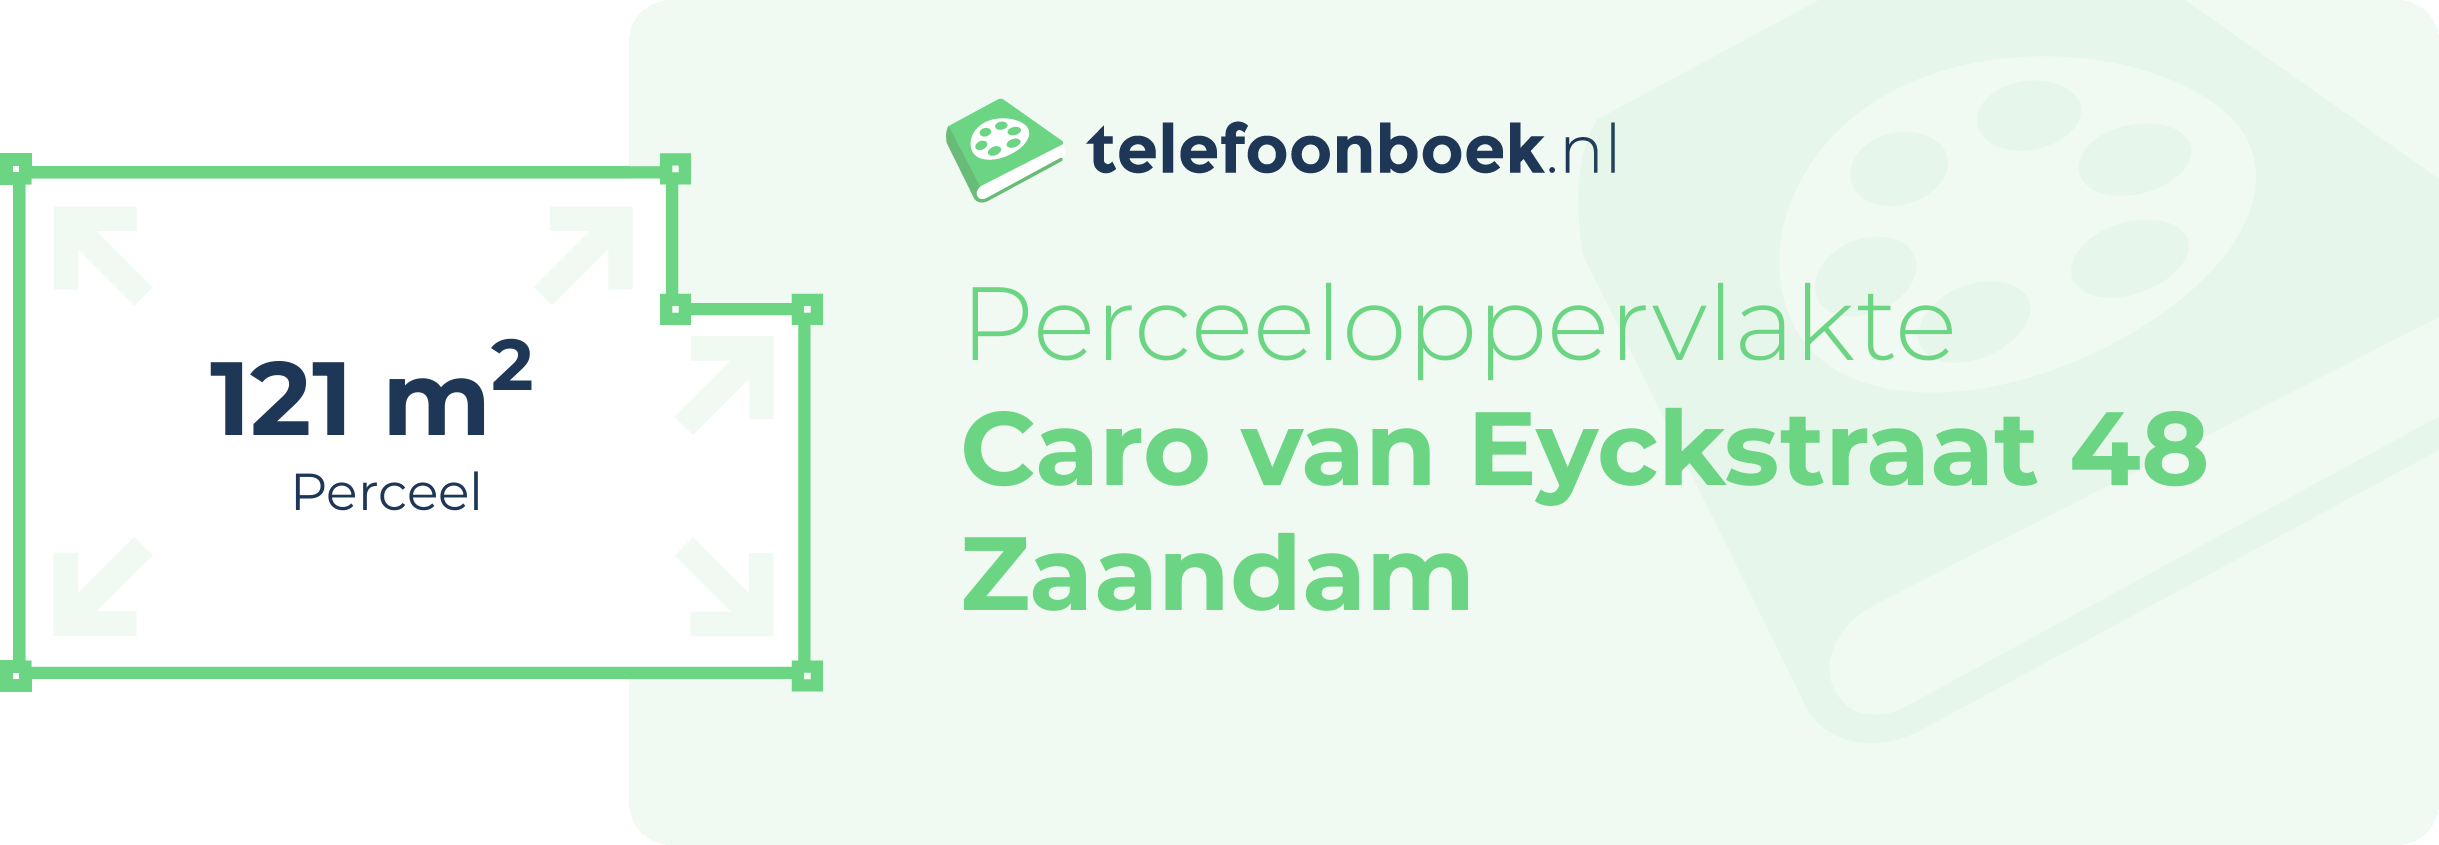 Perceeloppervlakte Caro Van Eyckstraat 48 Zaandam